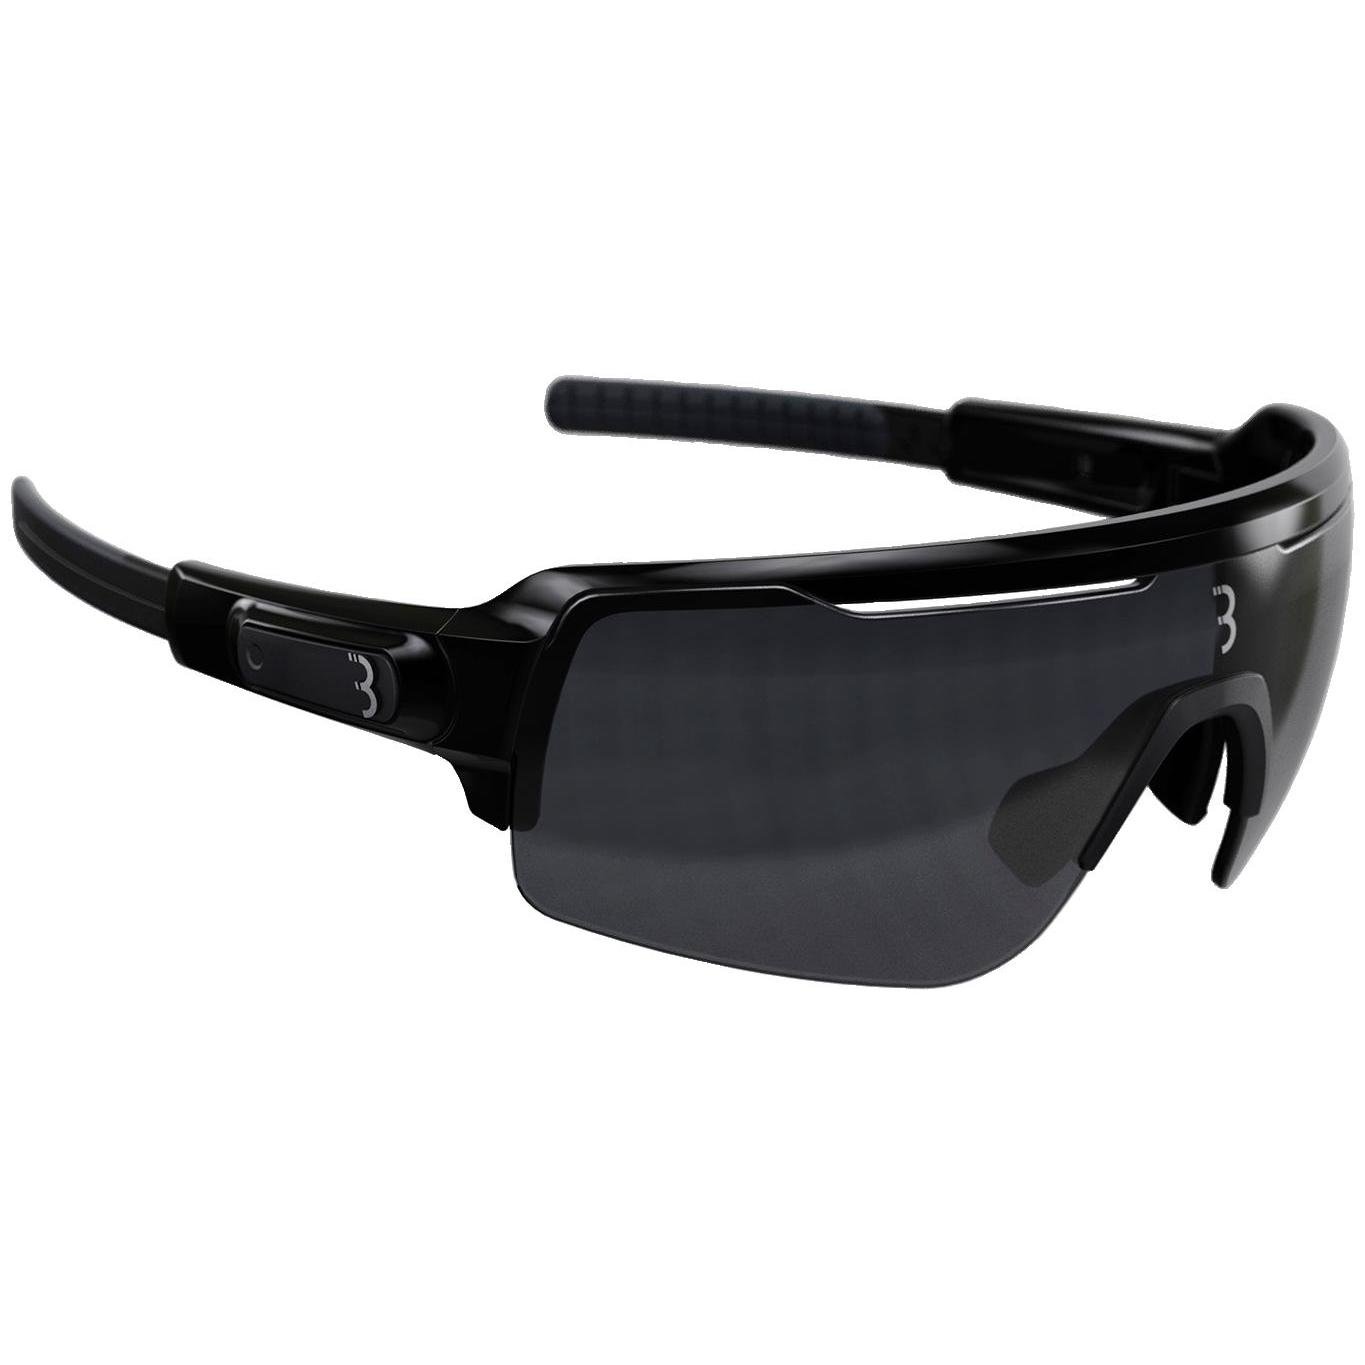 Очки велосипедные BBB 2019 sunglasses Commander PC Smoke MLC silver lens PC clear, glossy black, BSG